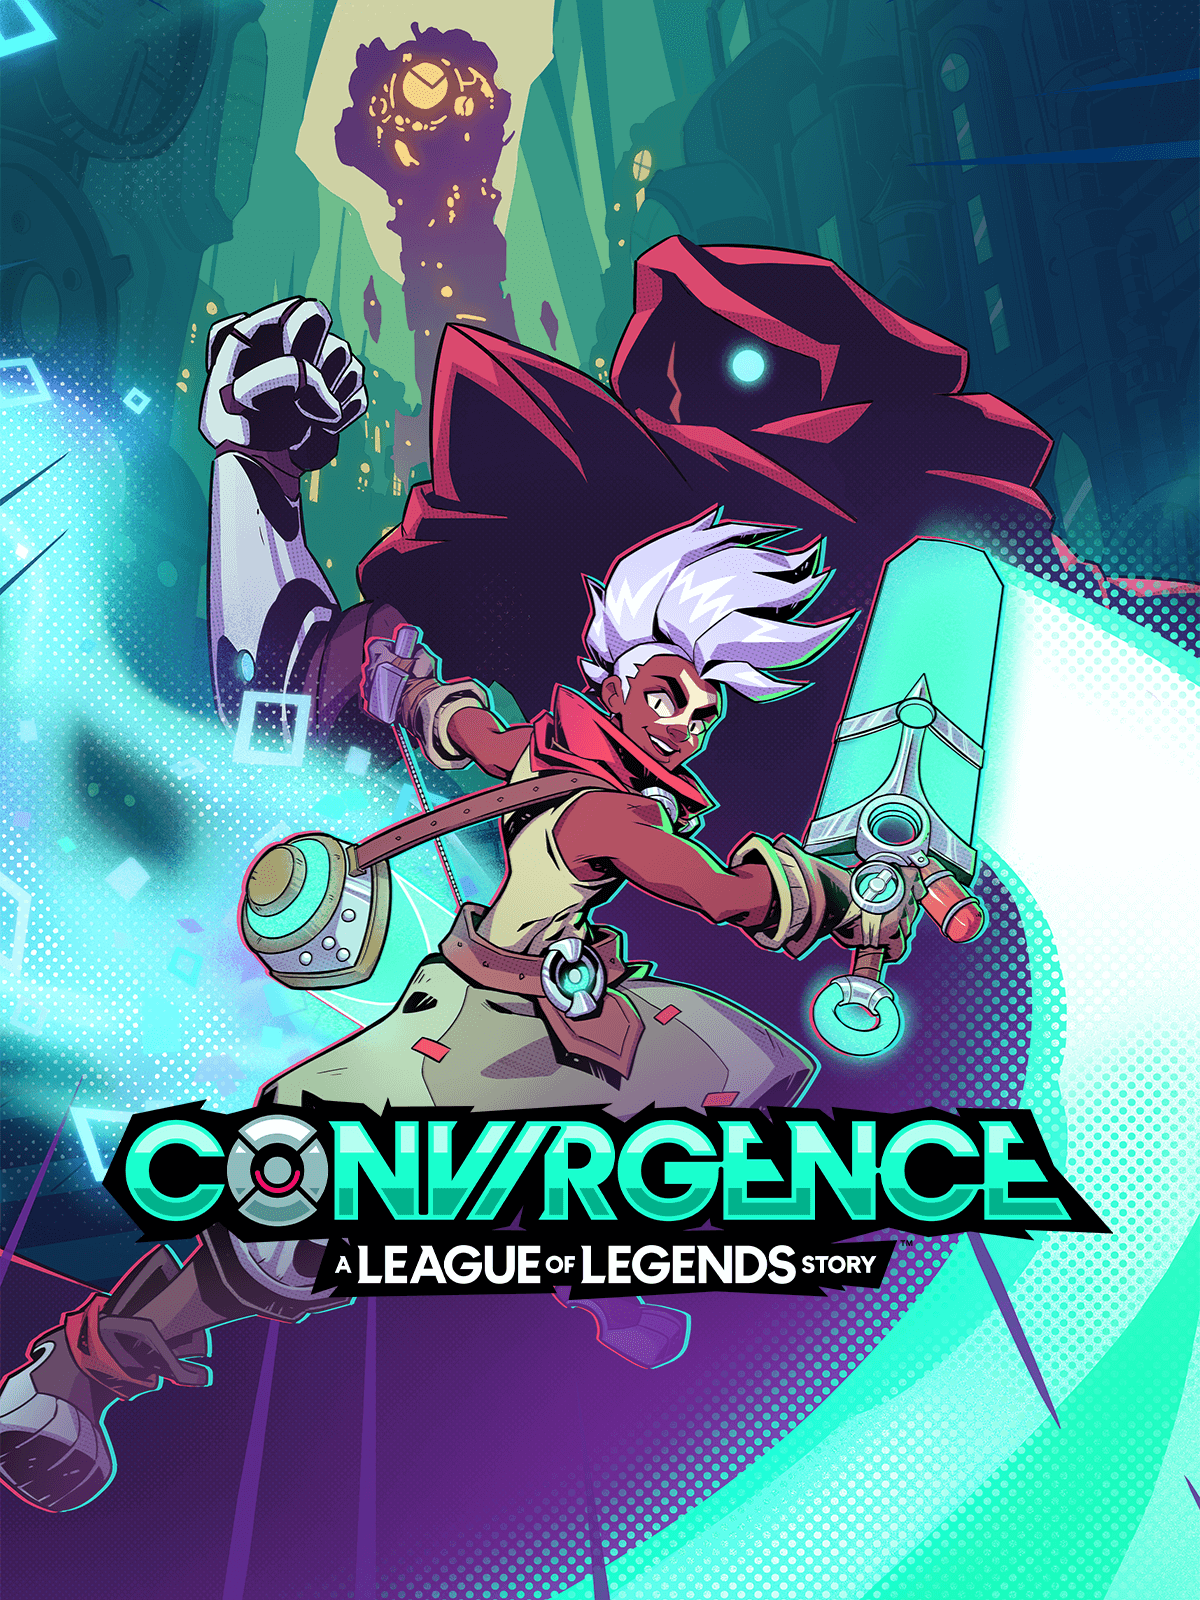 CONVRGENCE: A League of Legends Story